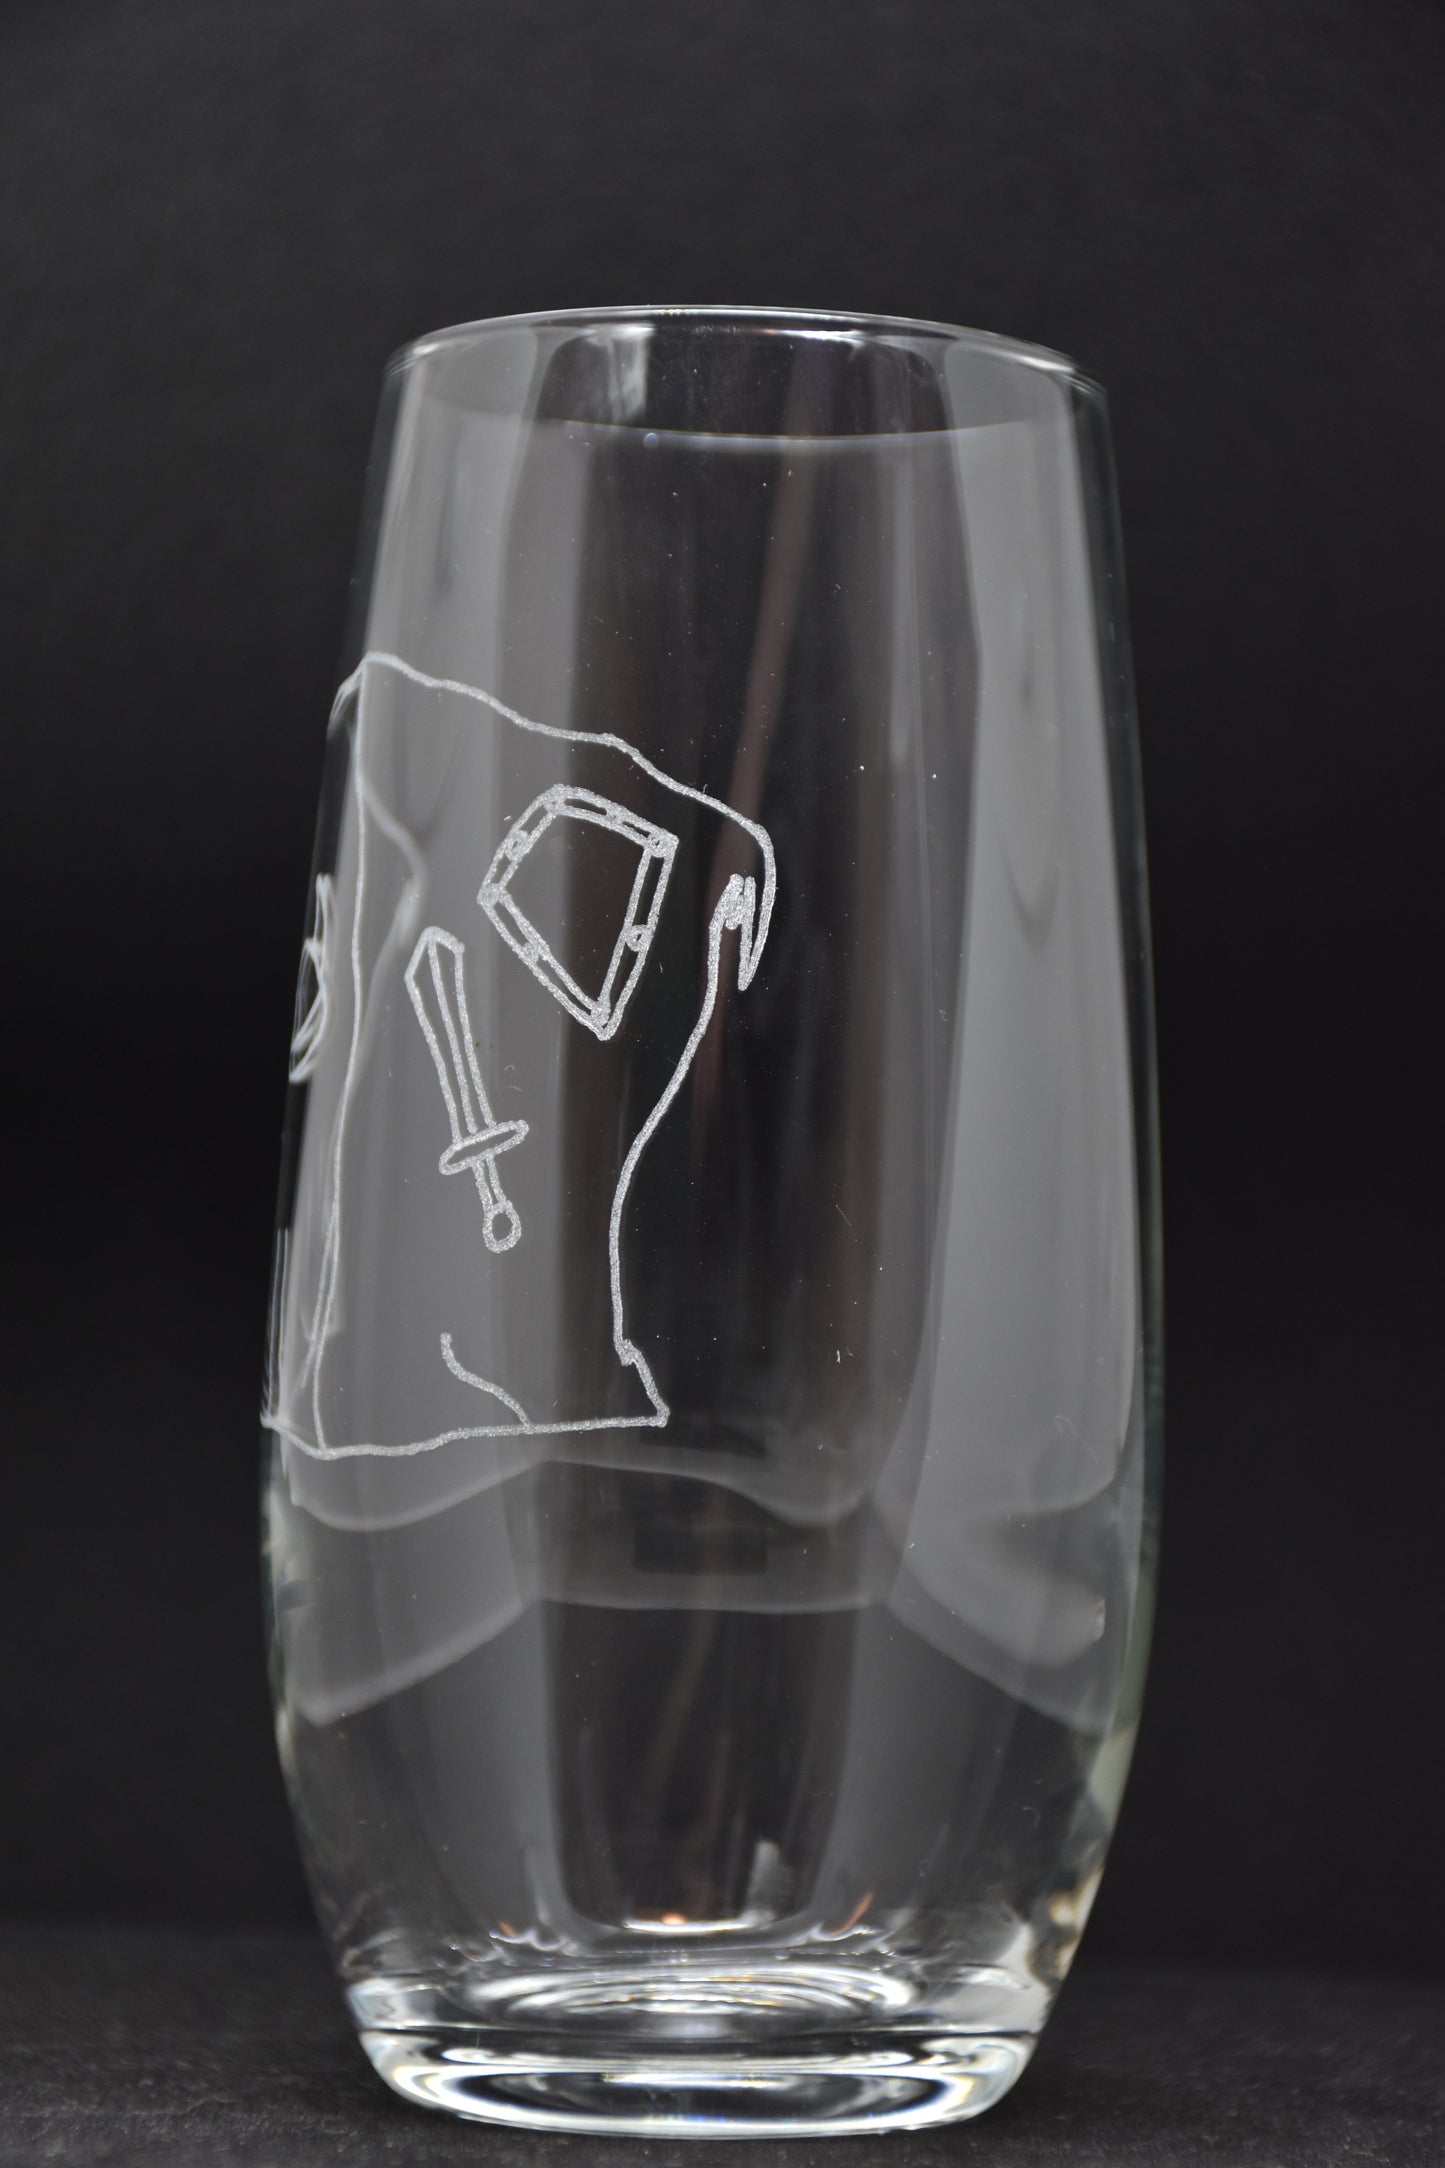 Gelatinous Cube - Dungeons & Dragons Engraved Glass